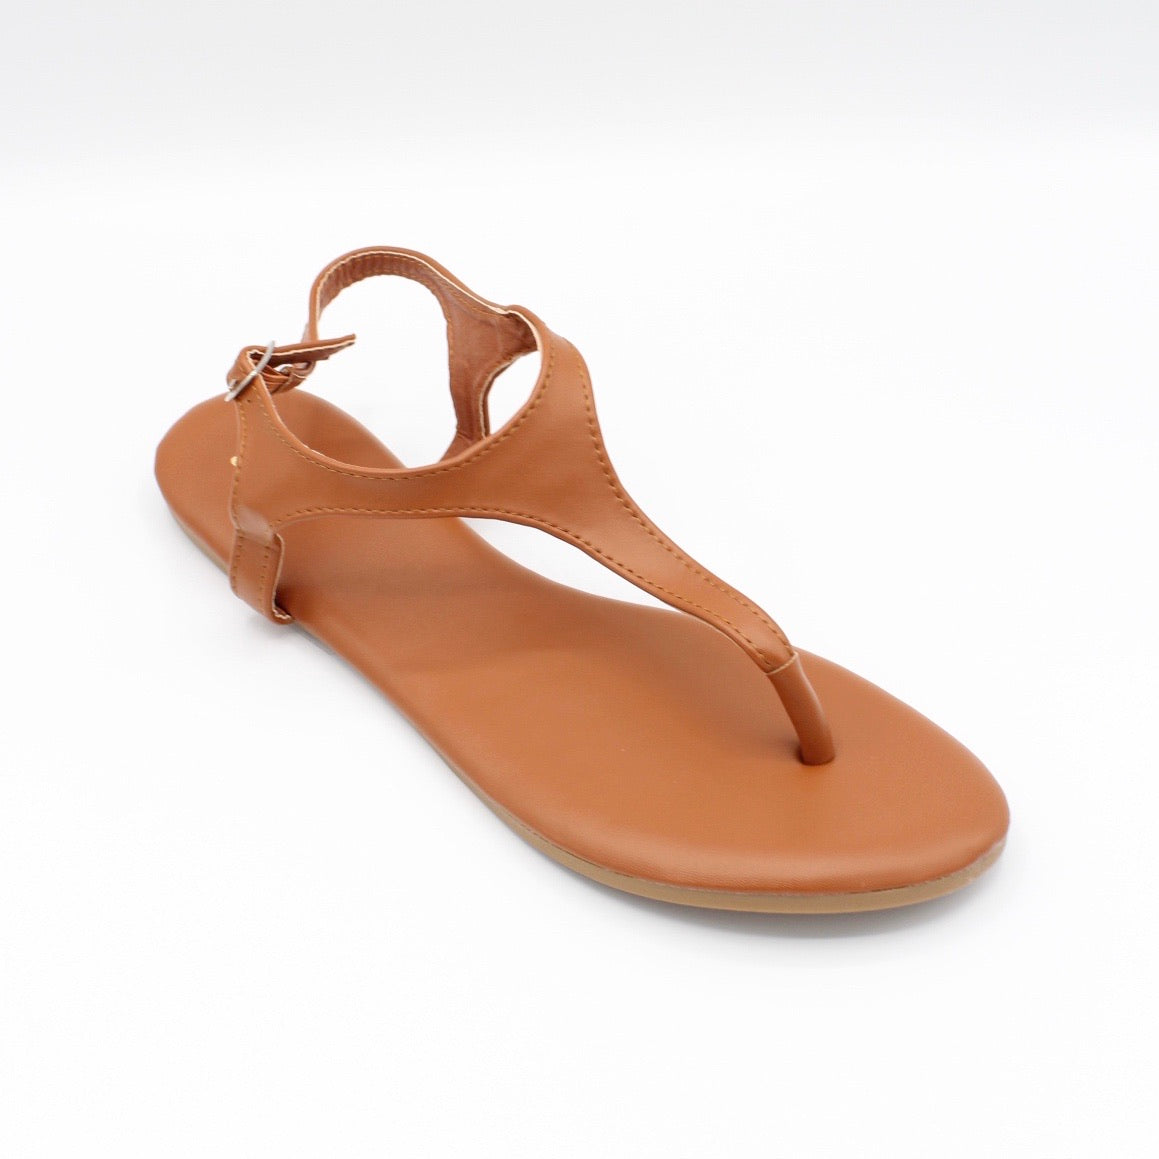 Tan color T strap sandal